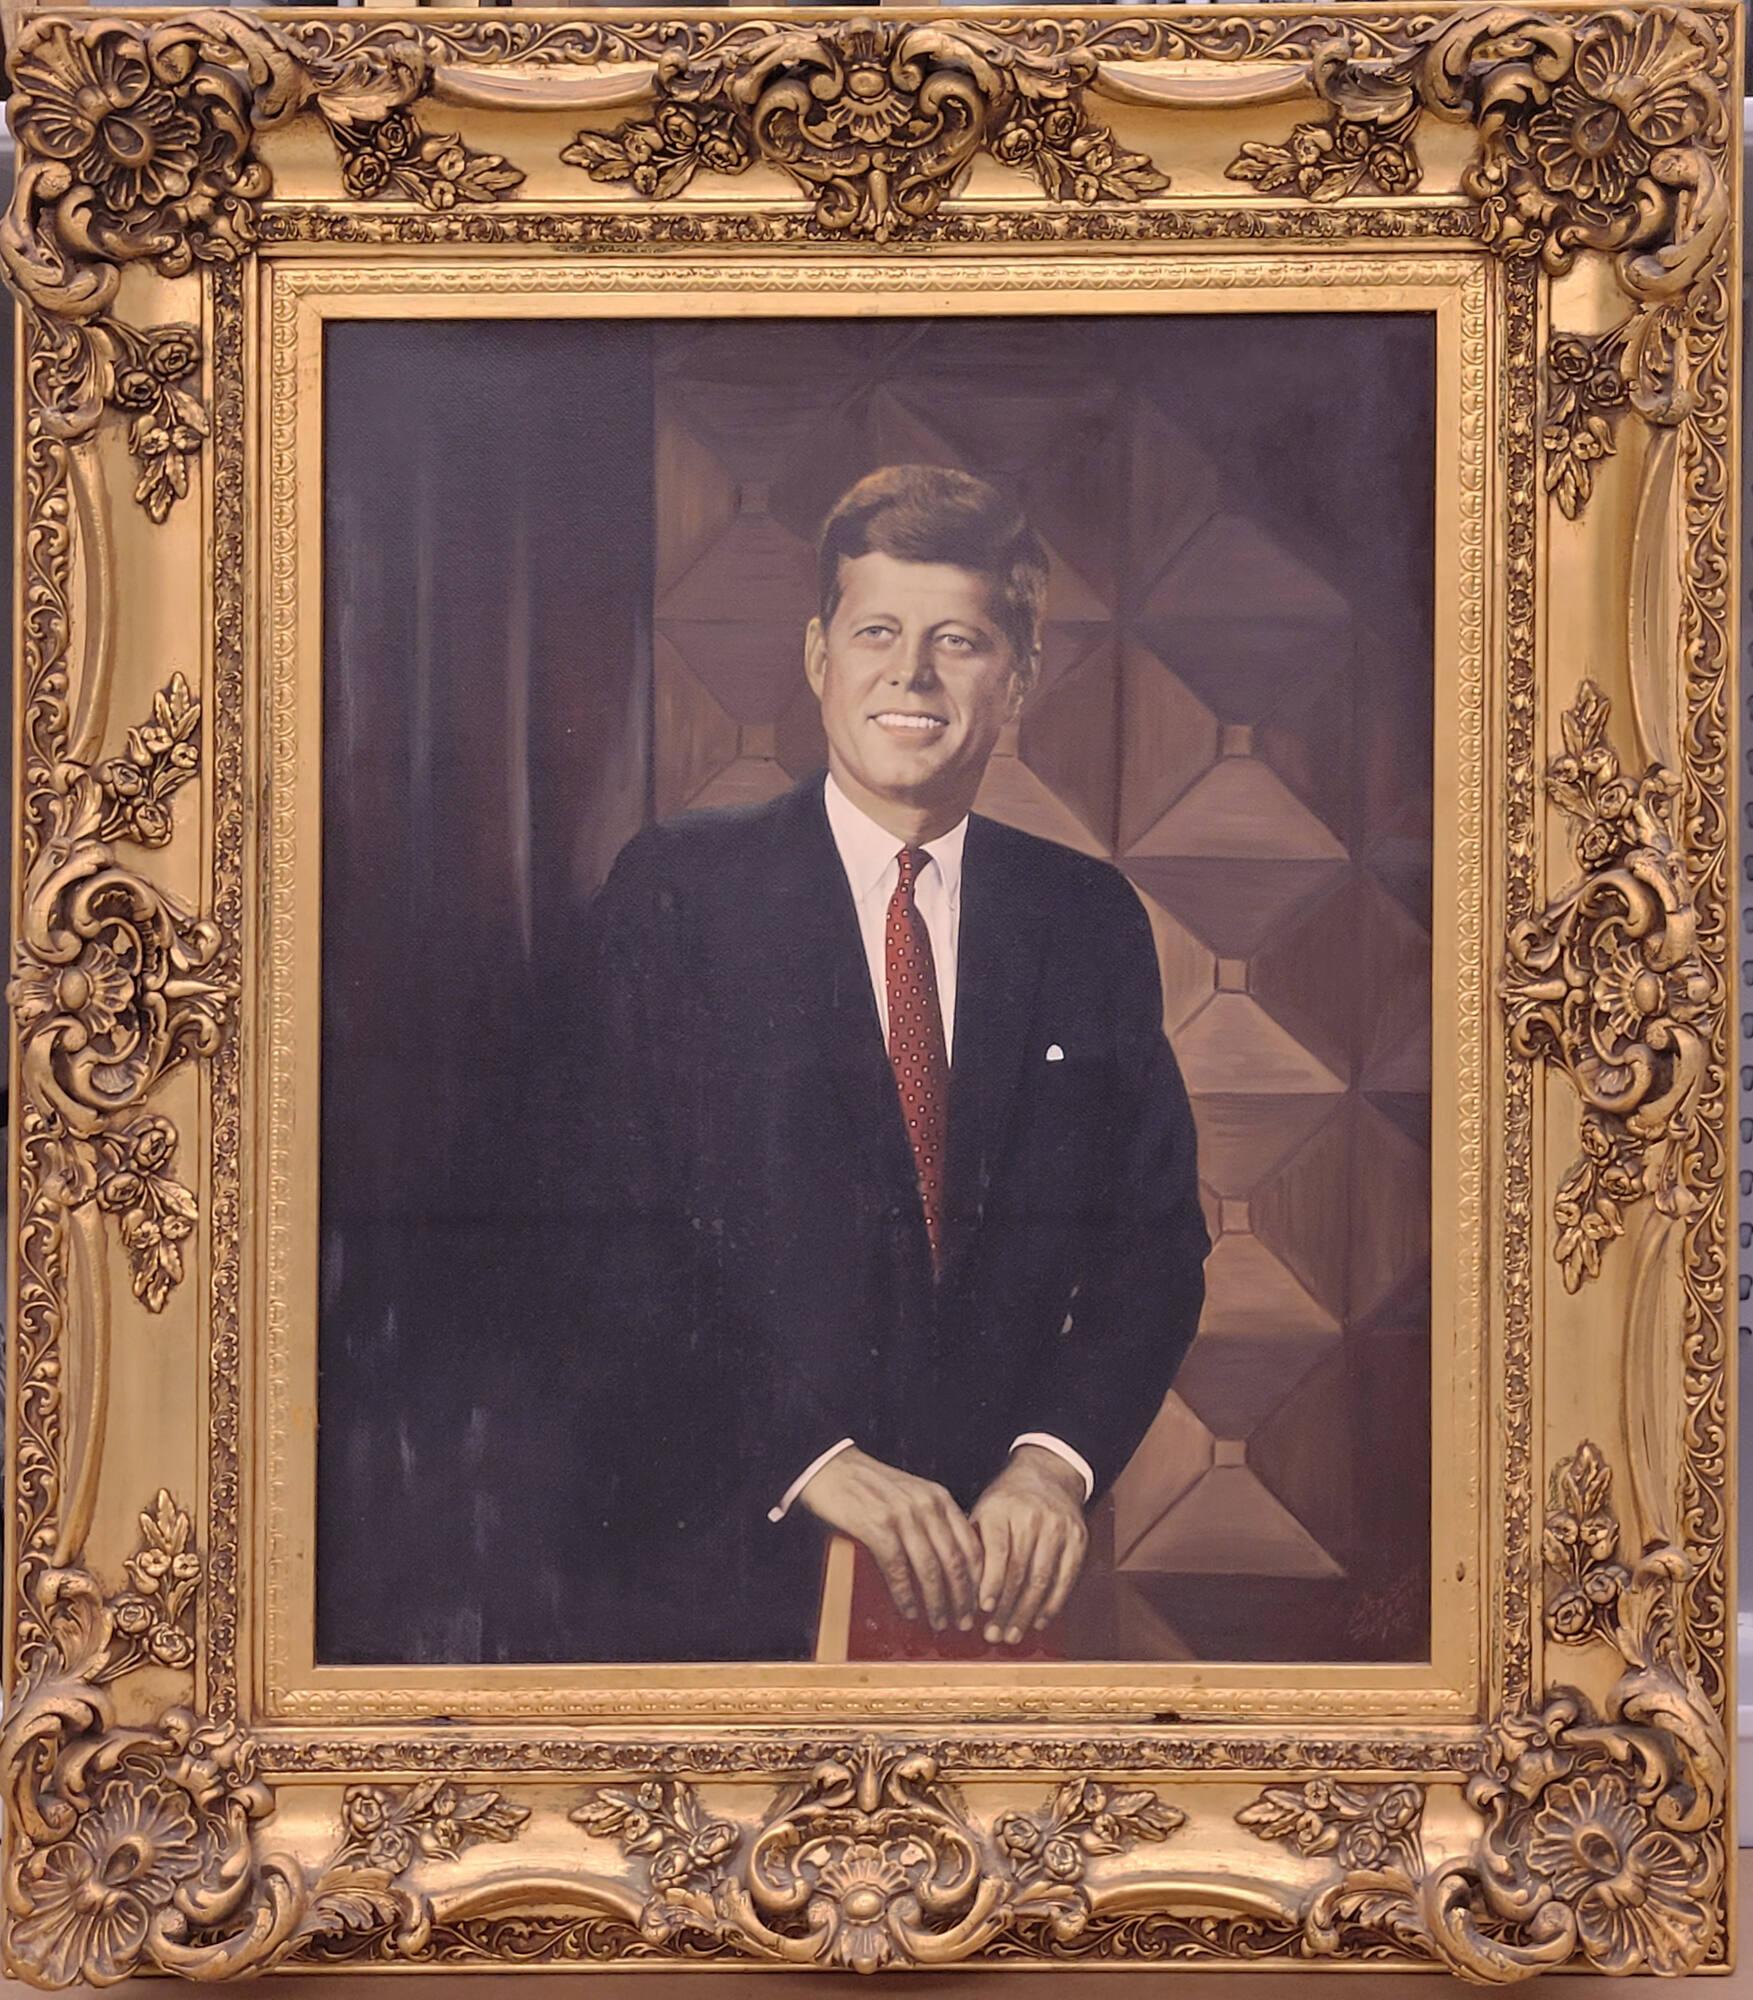 Portrait Of John F Kennedy All Artifacts The John F Kennedy